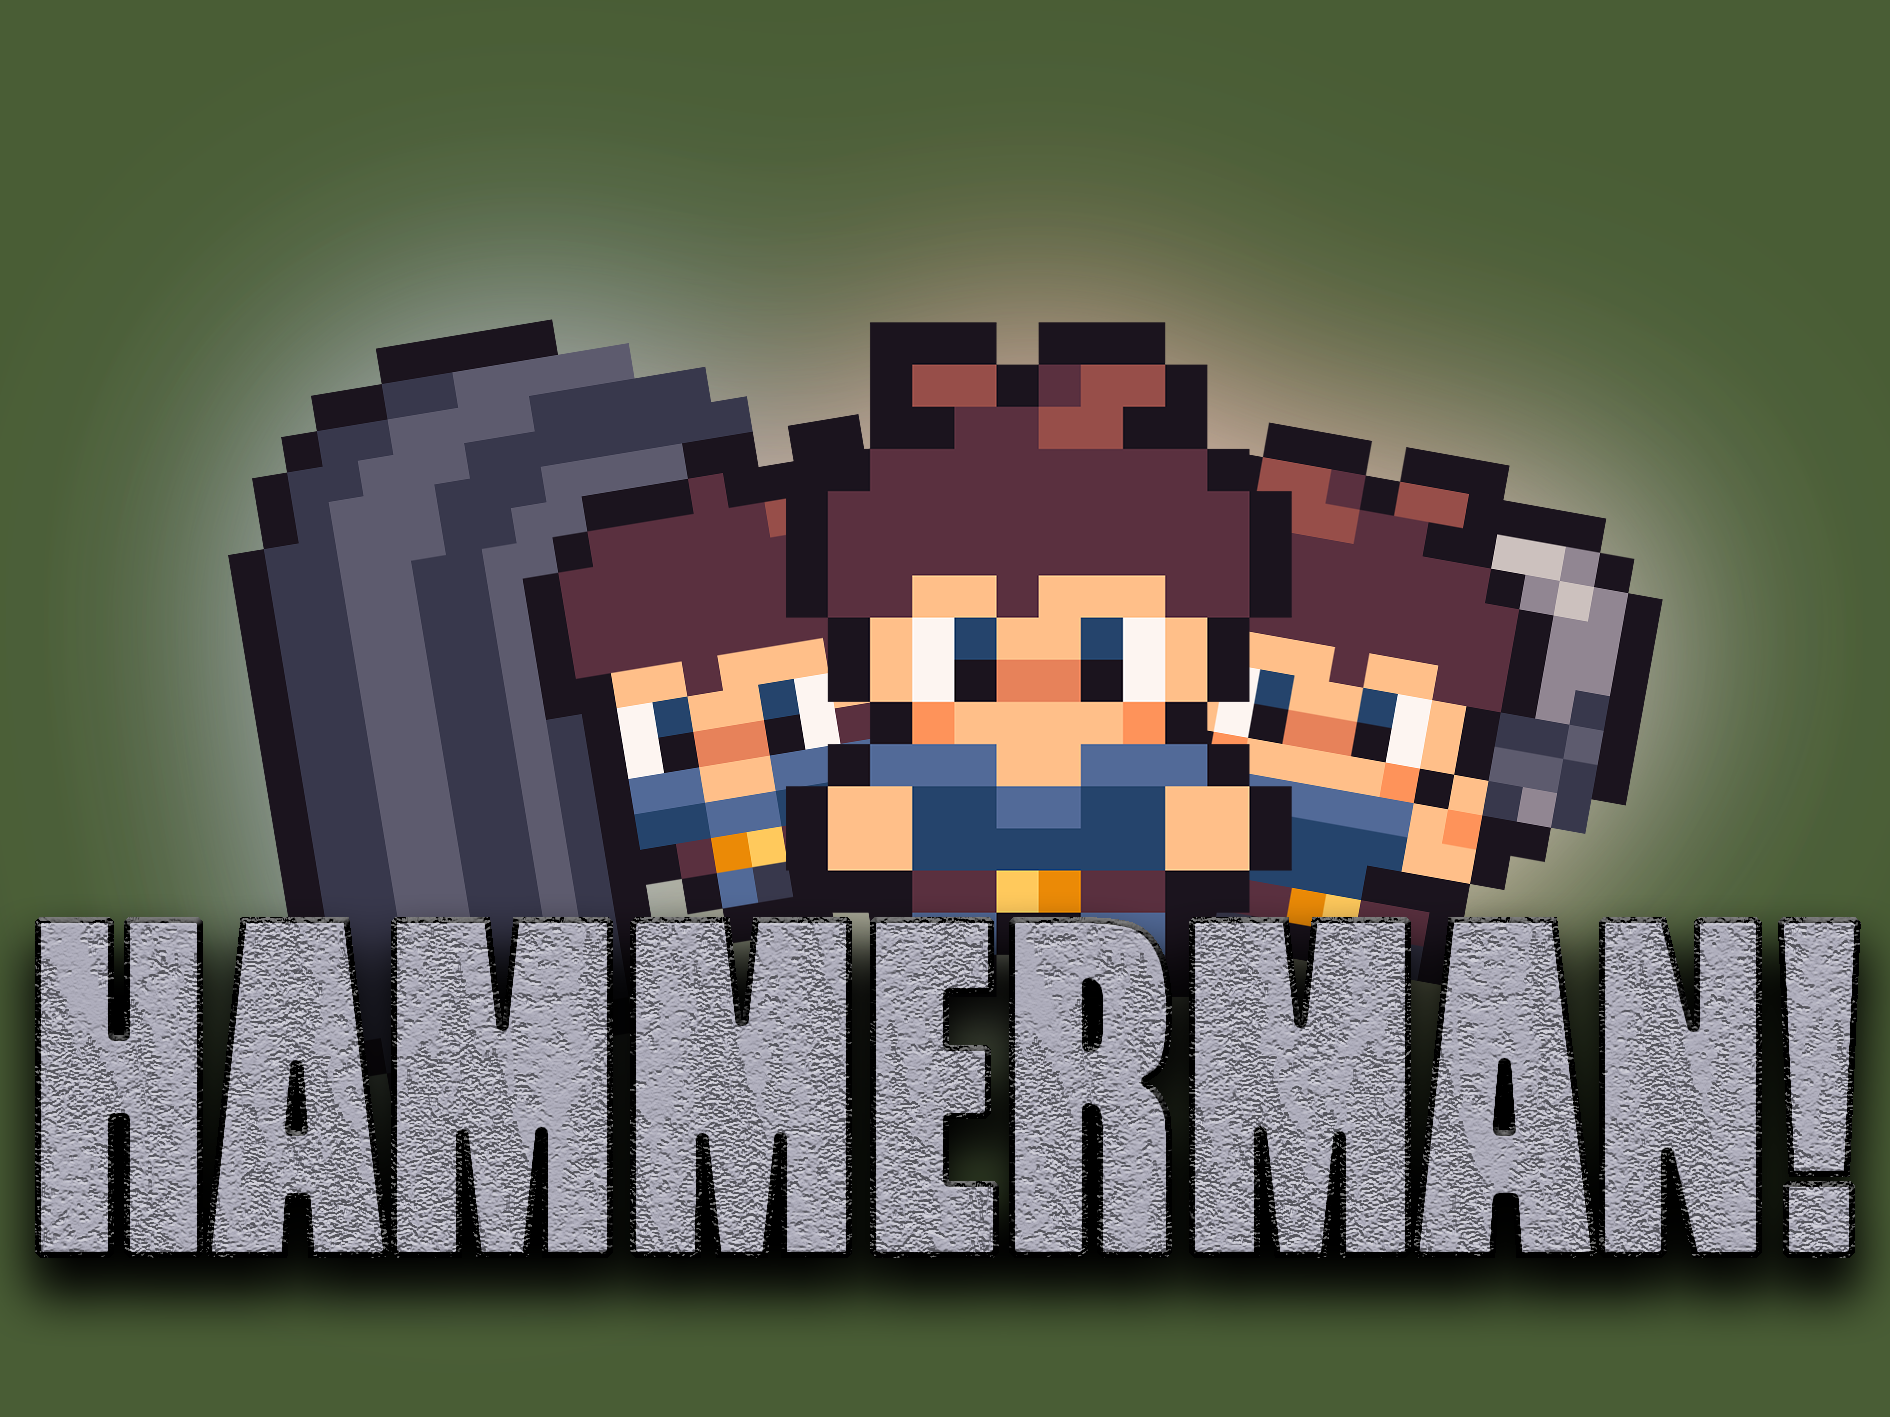 Hammerman!